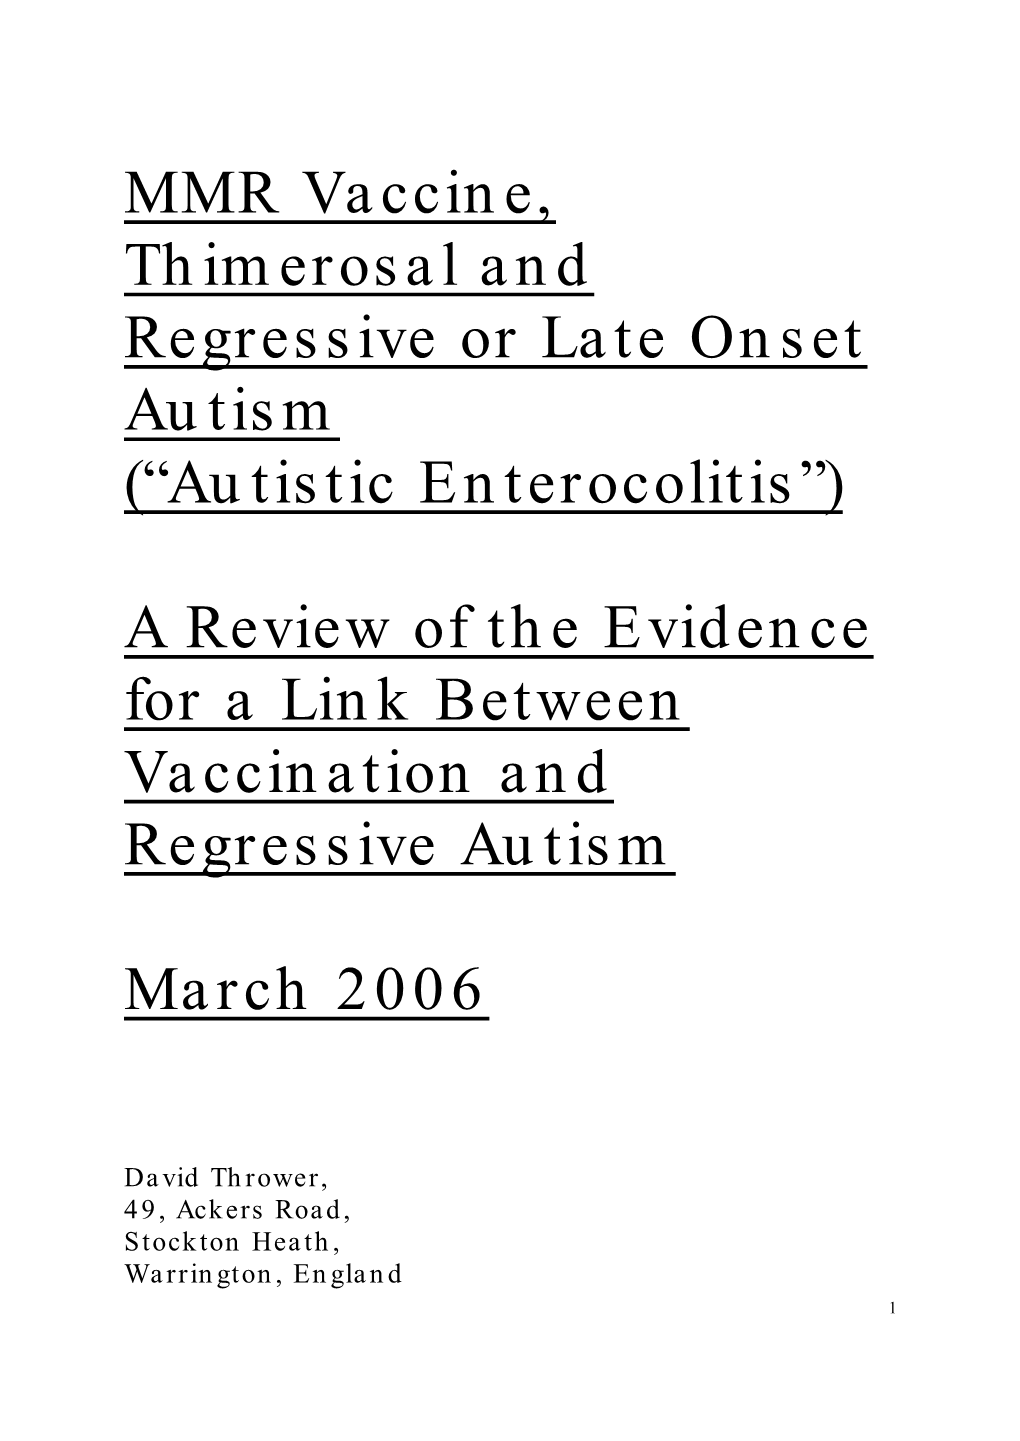 MMR Vaccine, Thimerosal and Regressive Or Late Onset Autism (“Autistic Enterocolitis”)